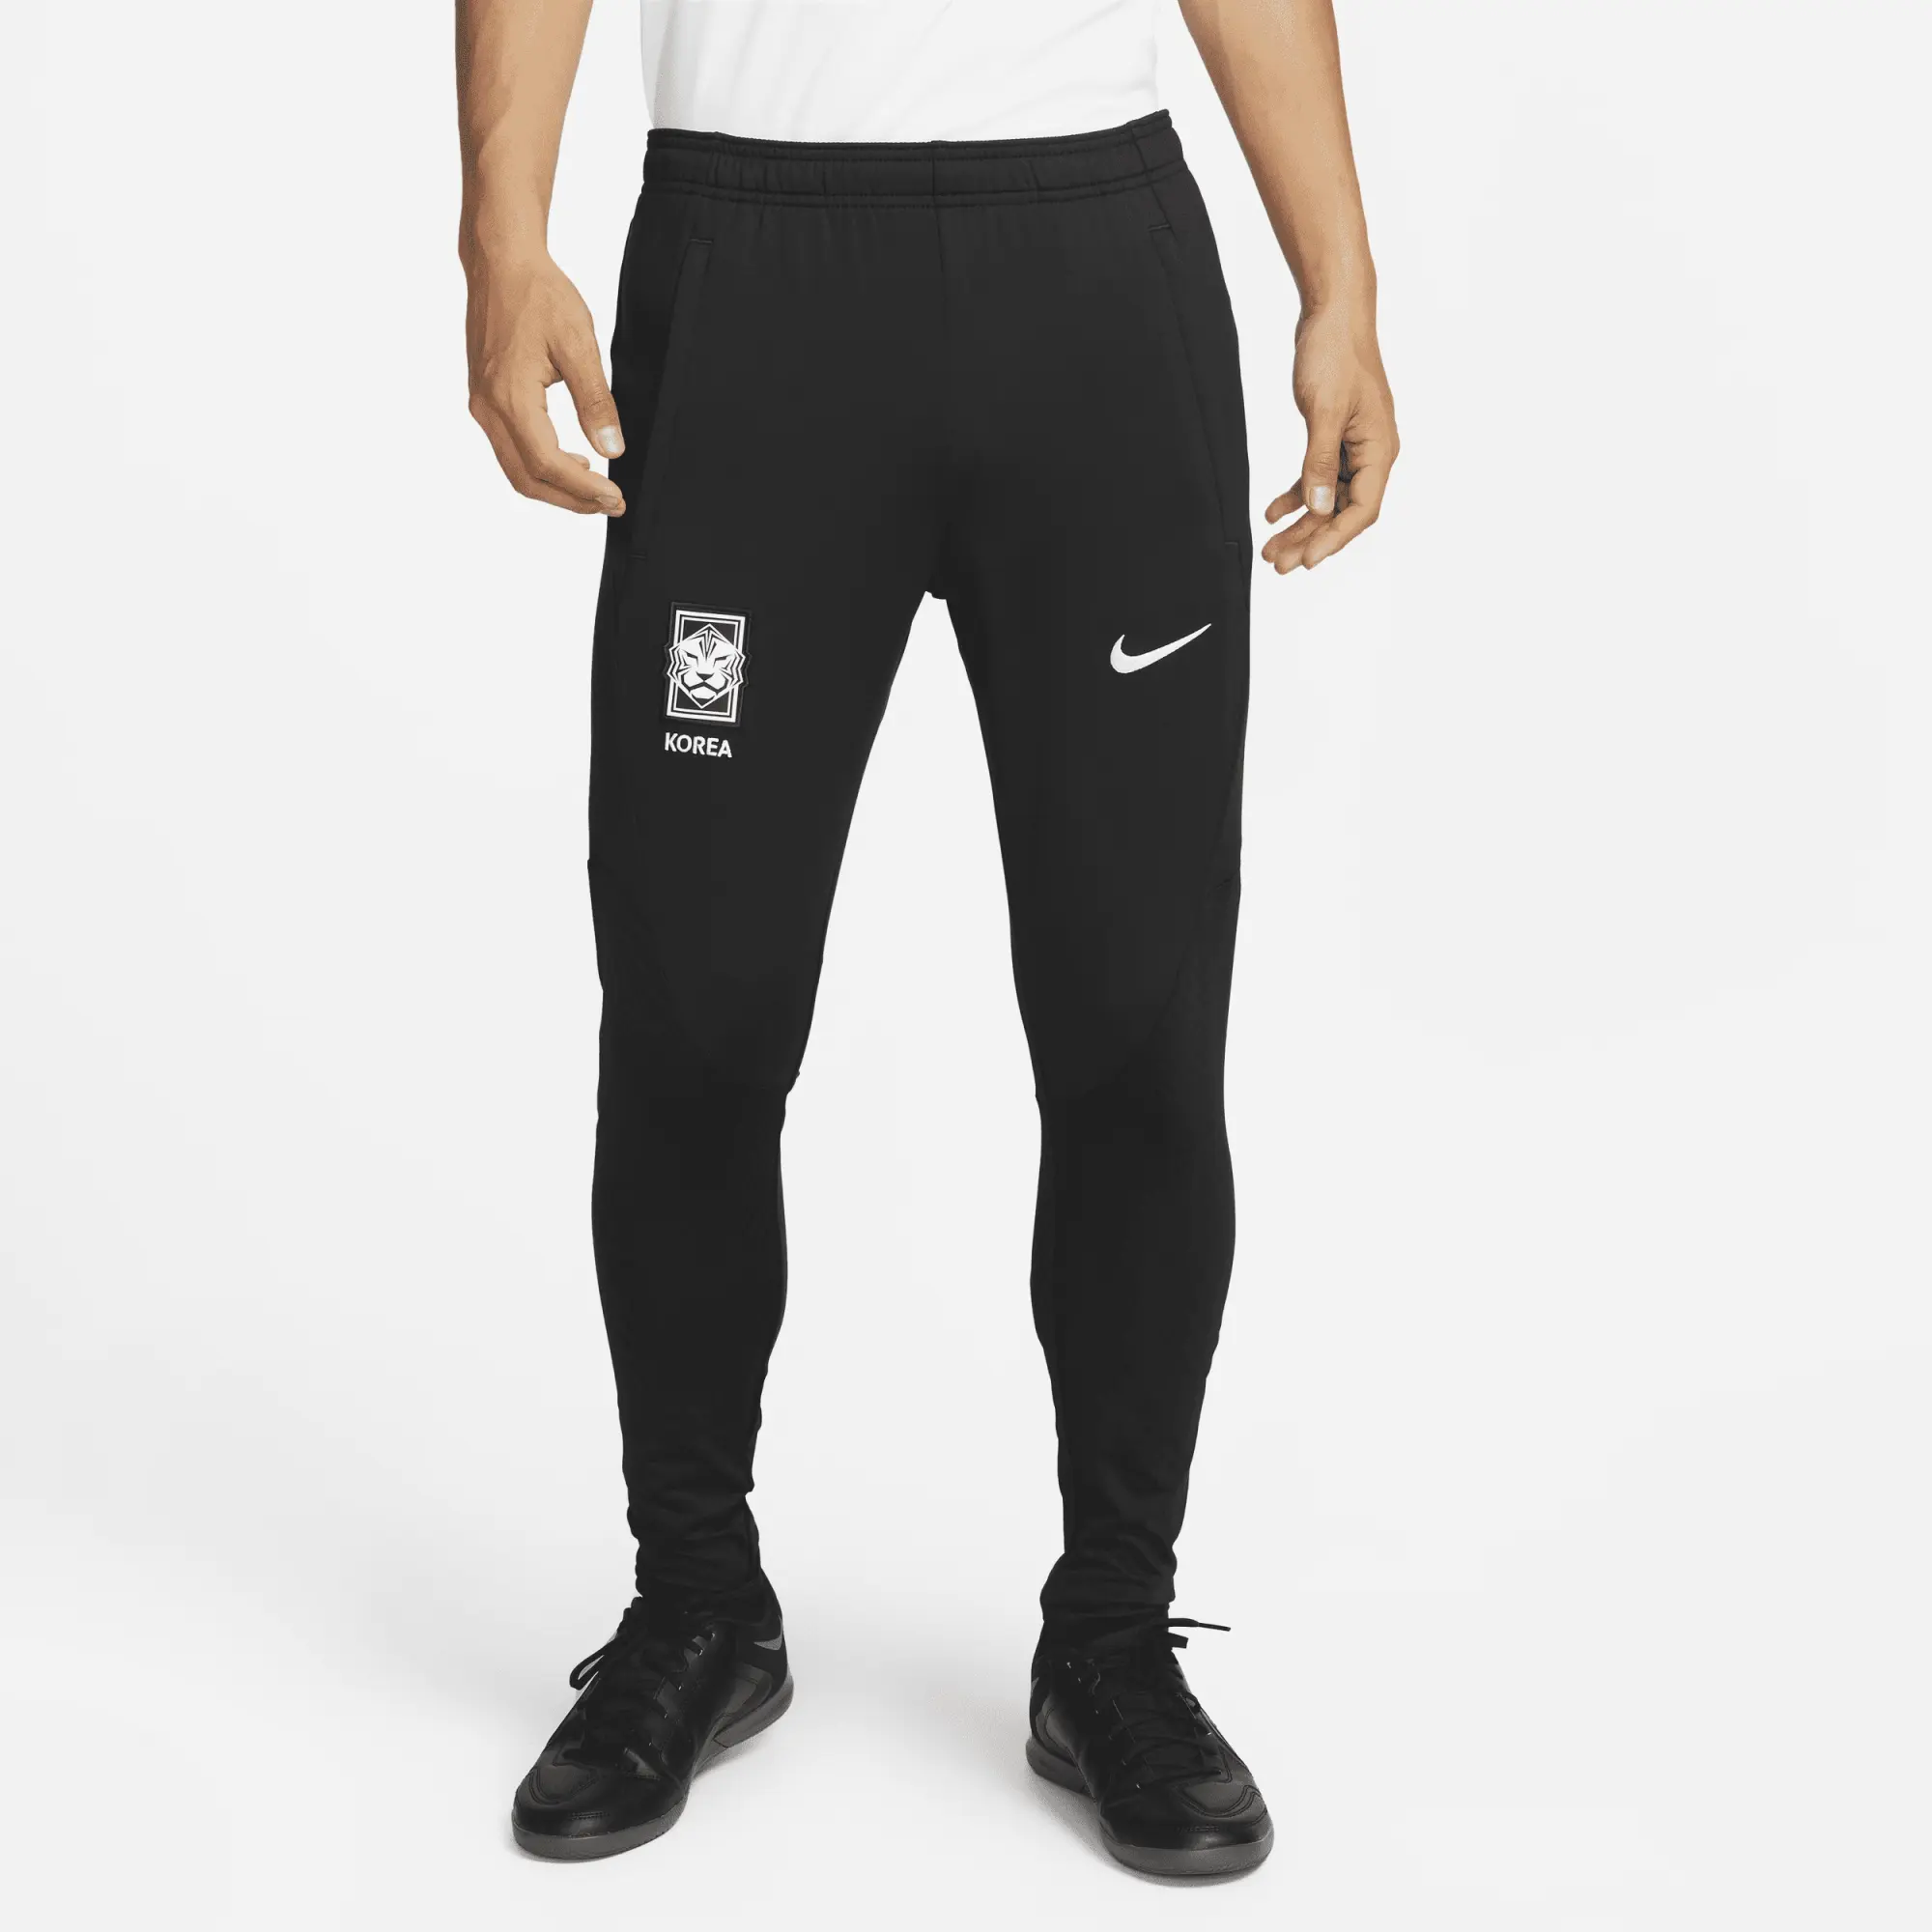 England Strike Men's Nike Dri-FIT Knit Soccer Track Pants